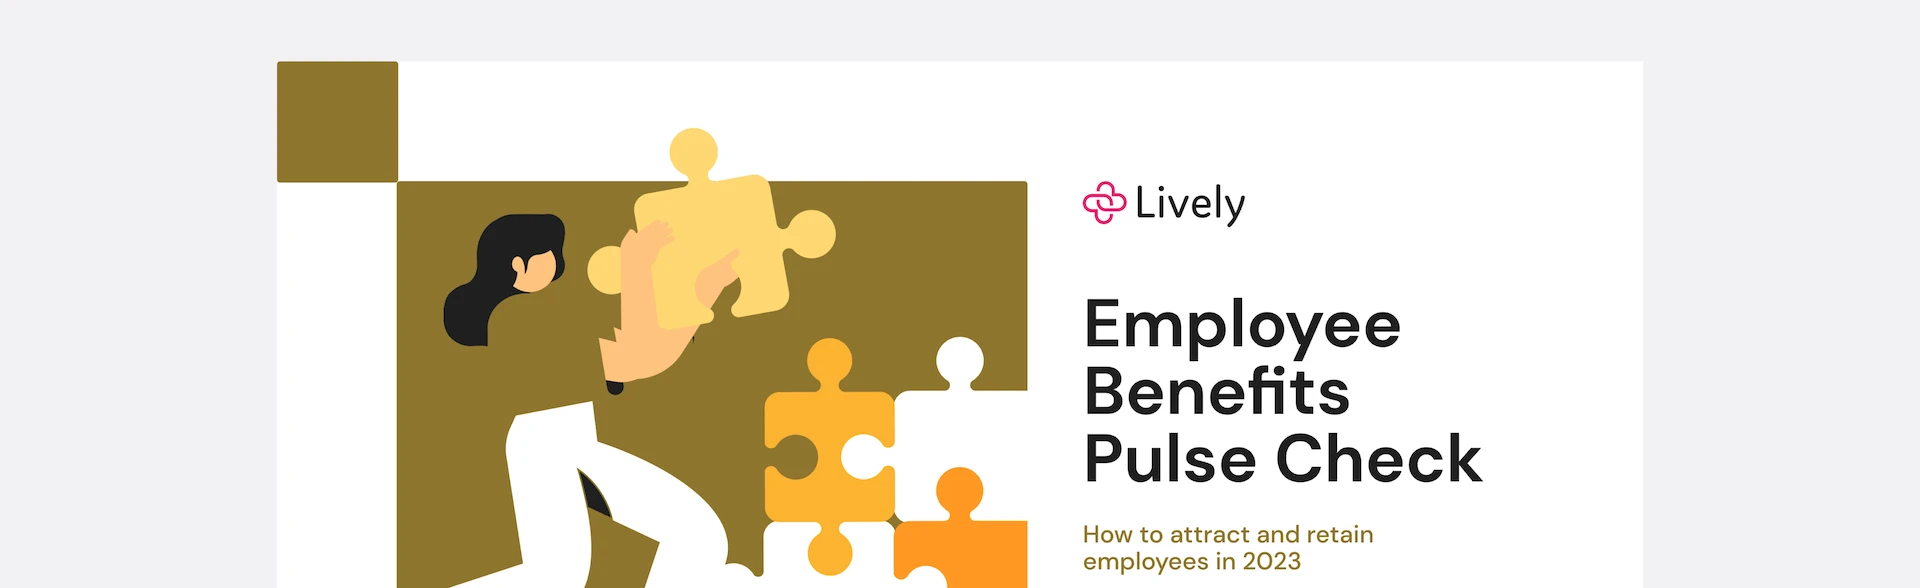 Employee Benefits Pulse Check Blog